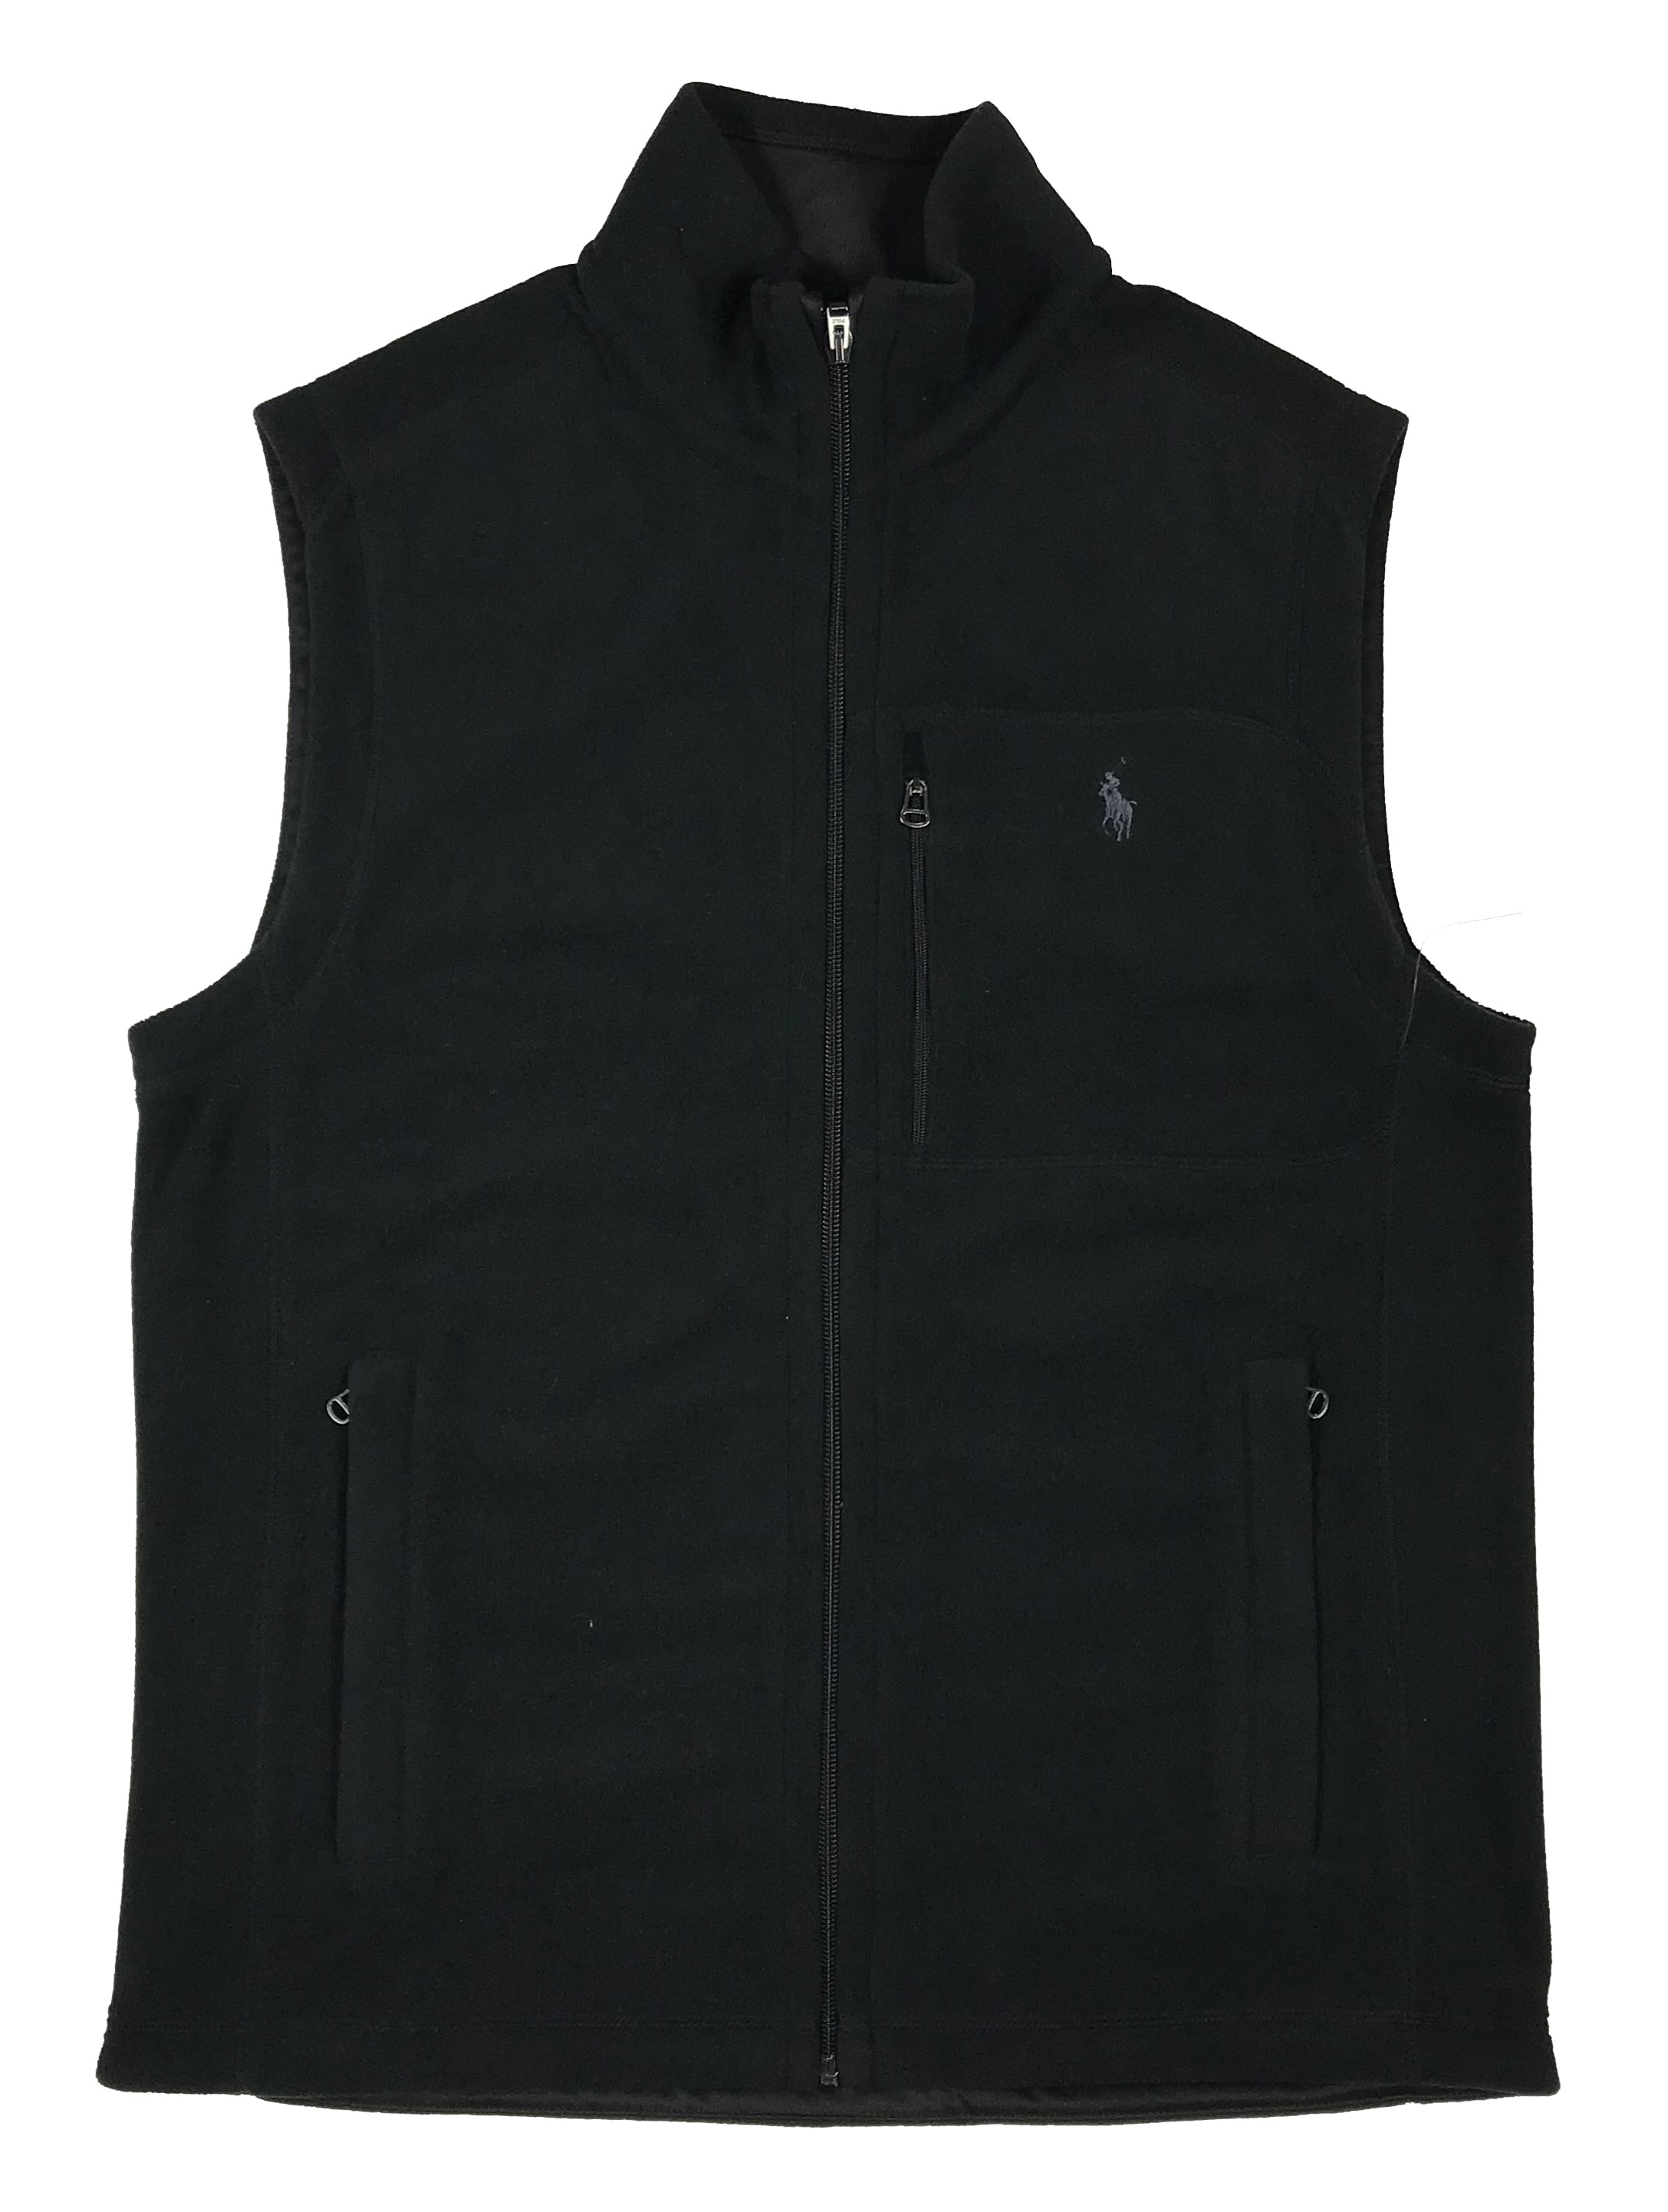 Ralph Lauren Polo Mens Pony Logo 3-Pocket Fleece Vest Jacket Black/Red/Navy  New (L,Black) 